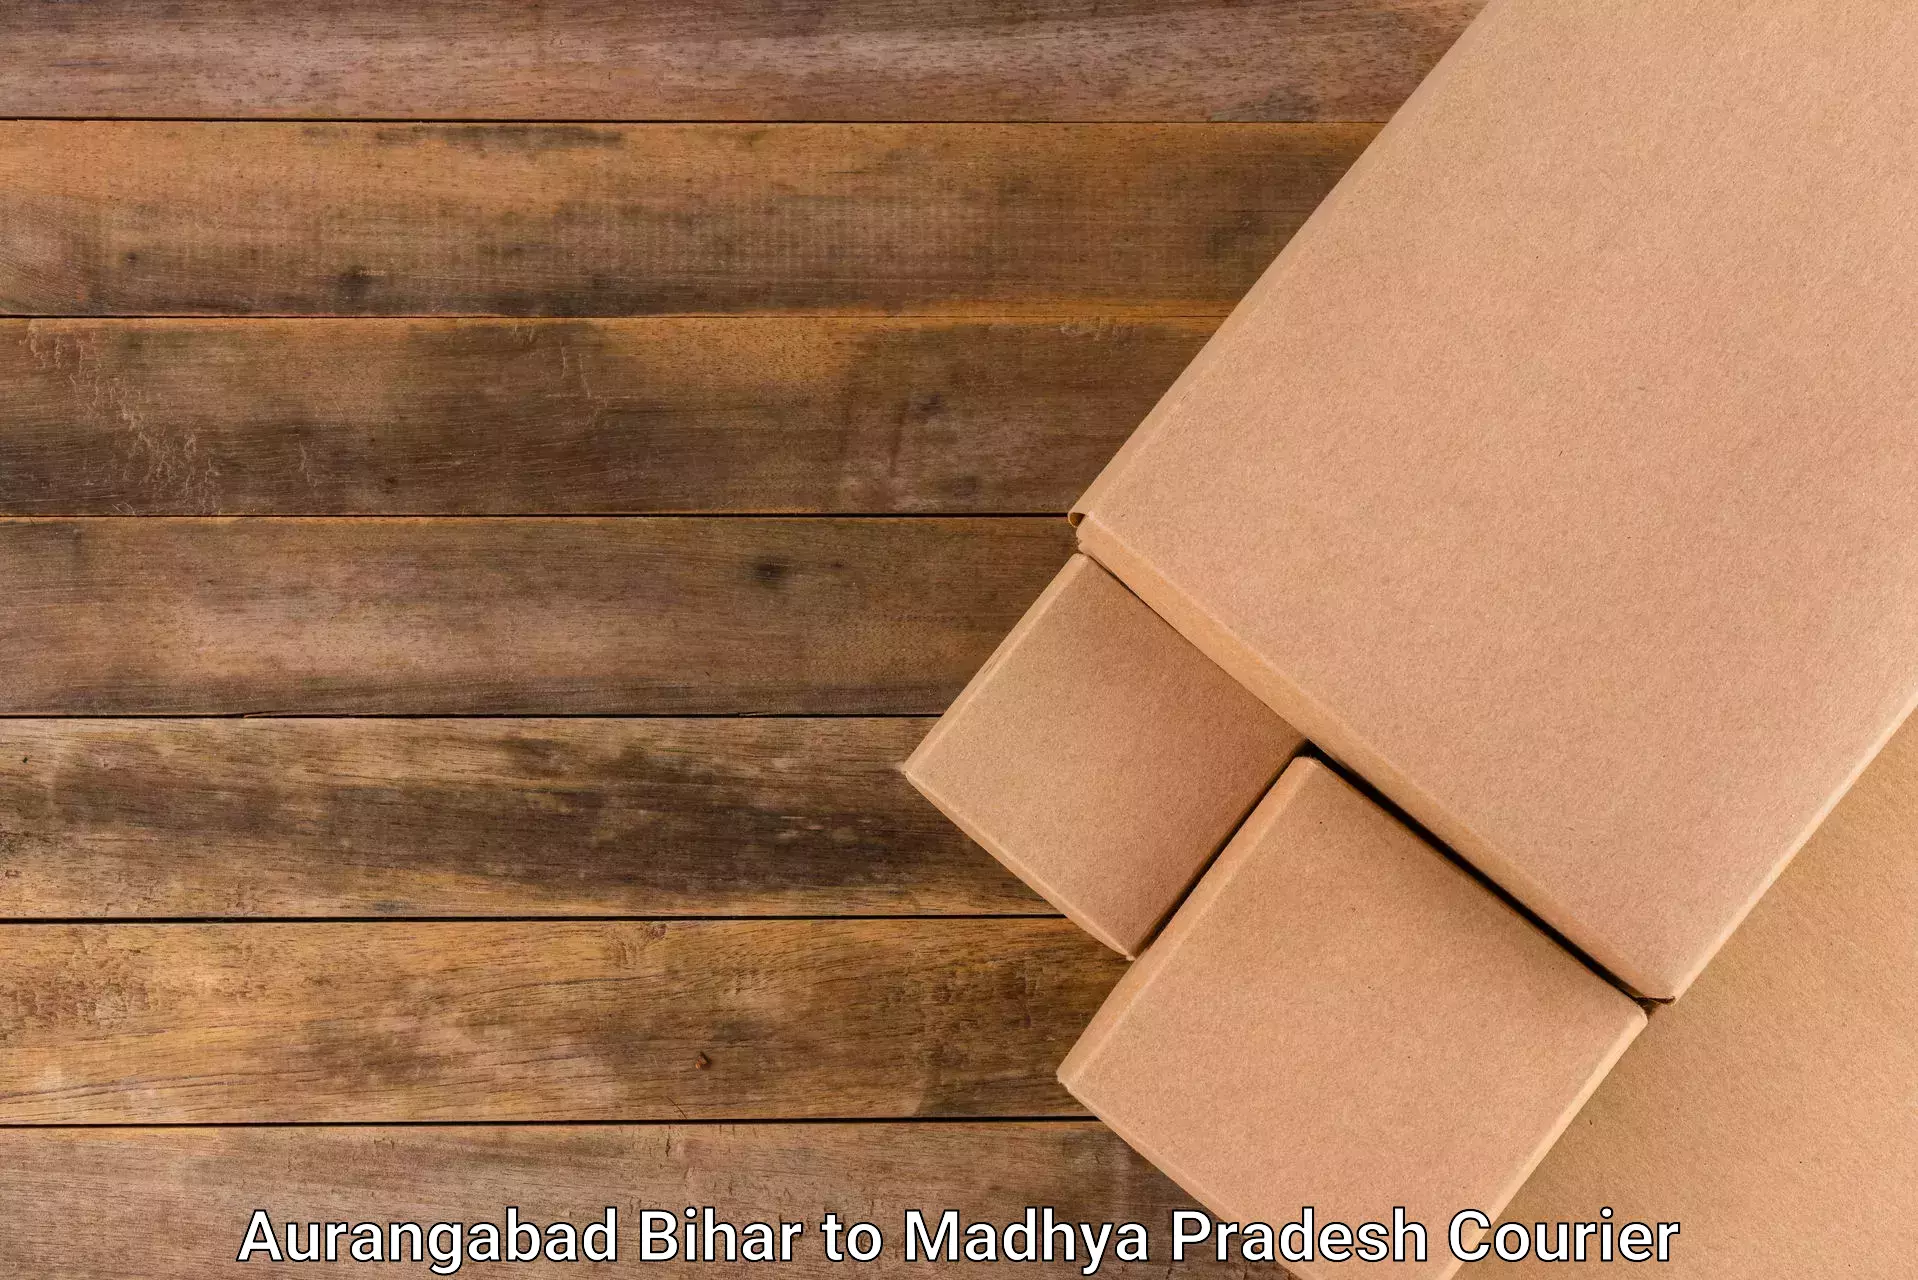 Efficient logistics management Aurangabad Bihar to Beohari